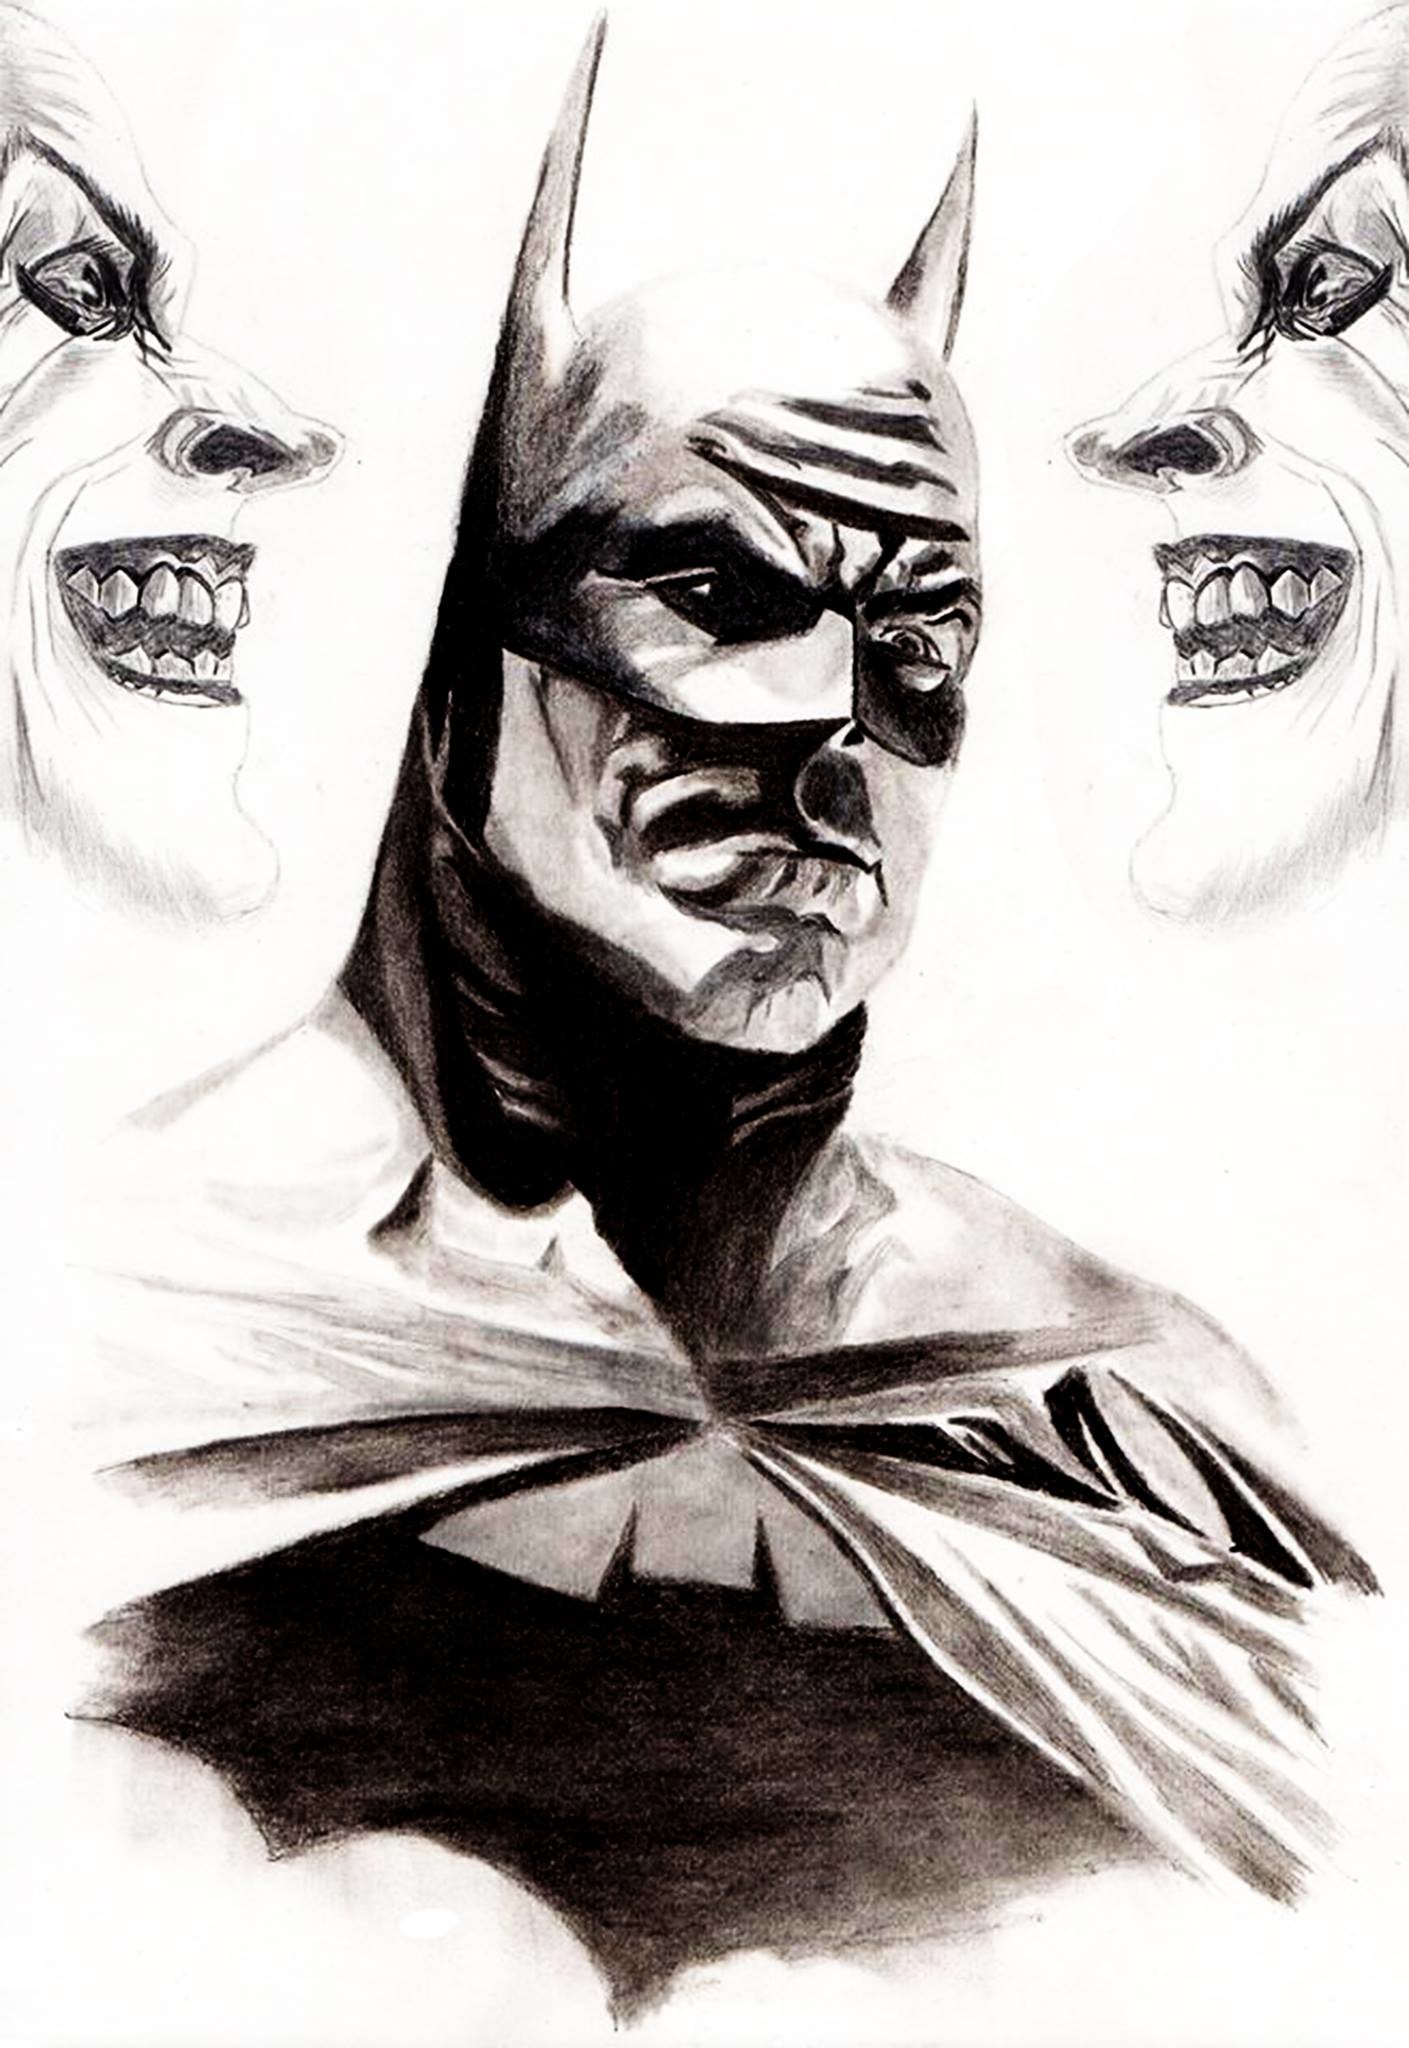 trust's art - Batman copy from a drawing of alex ross